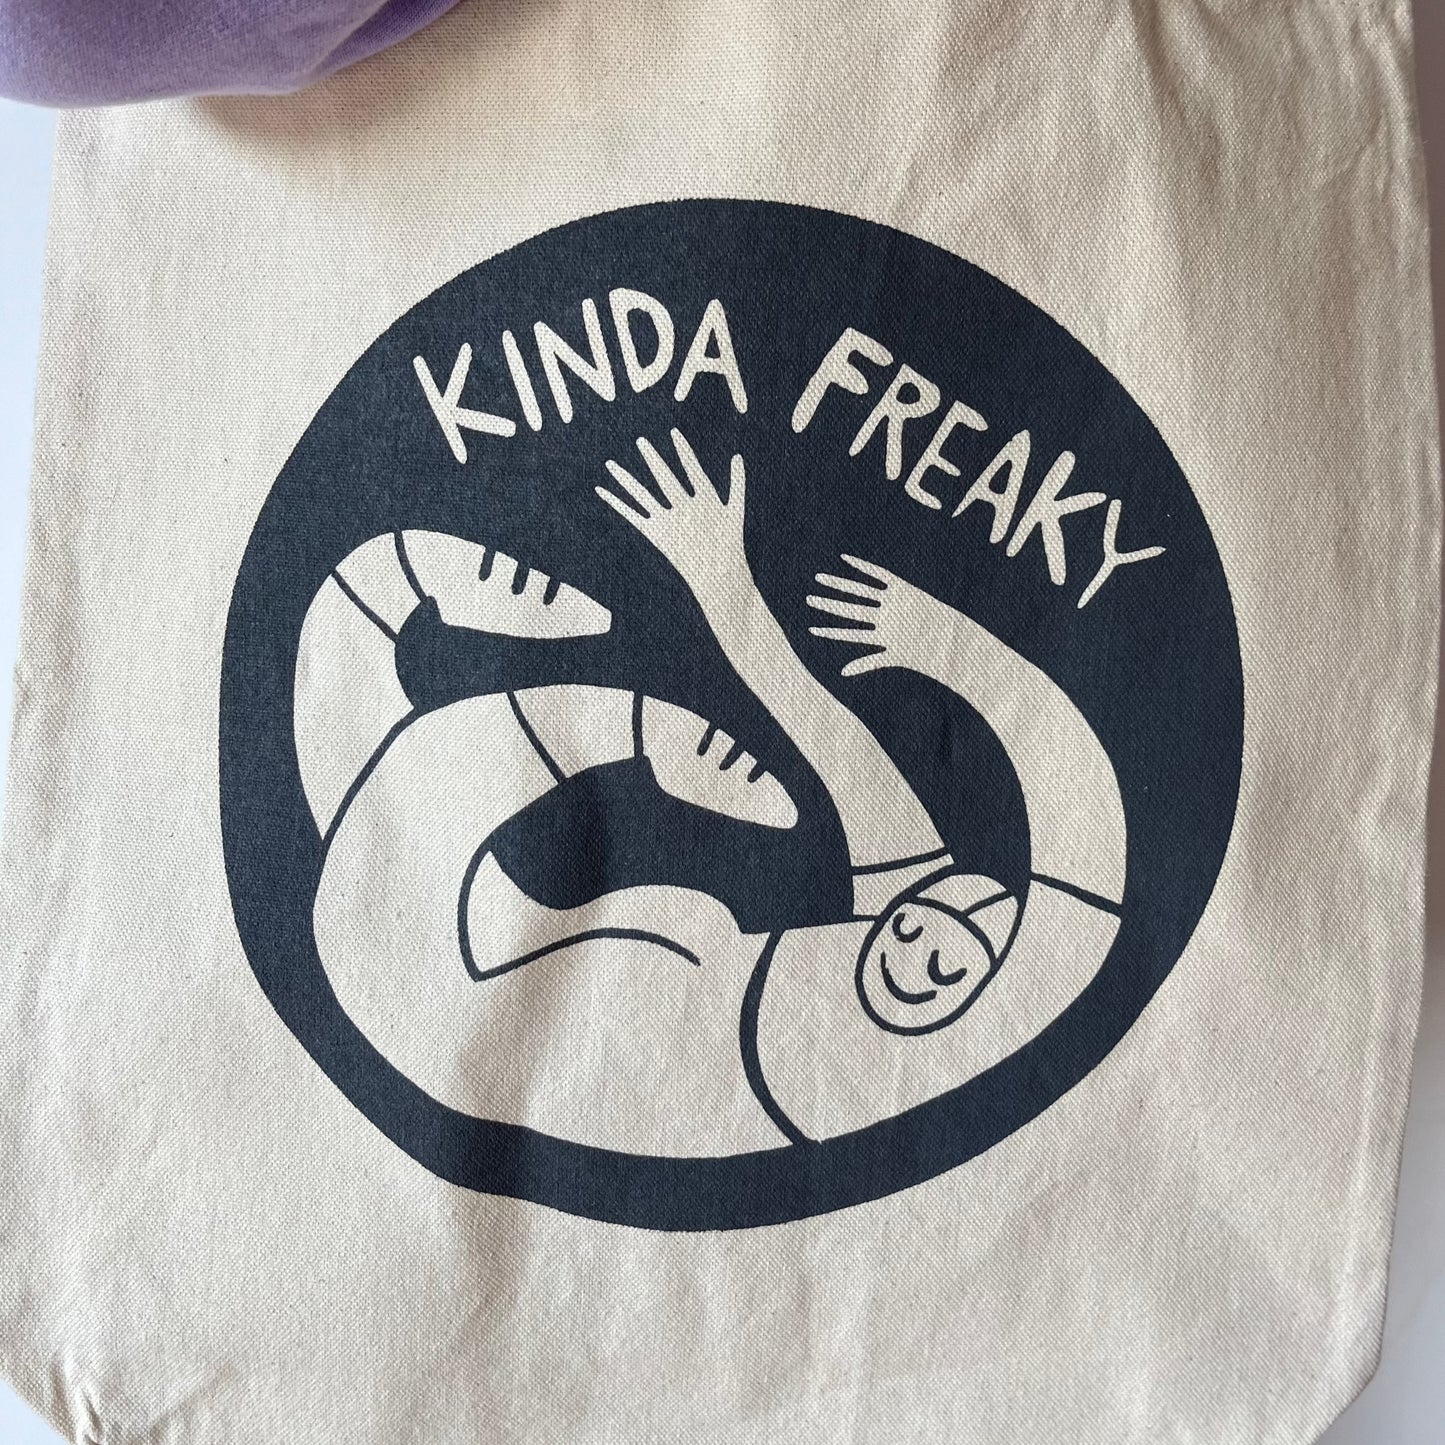 Kinda Freaky Tote Bag